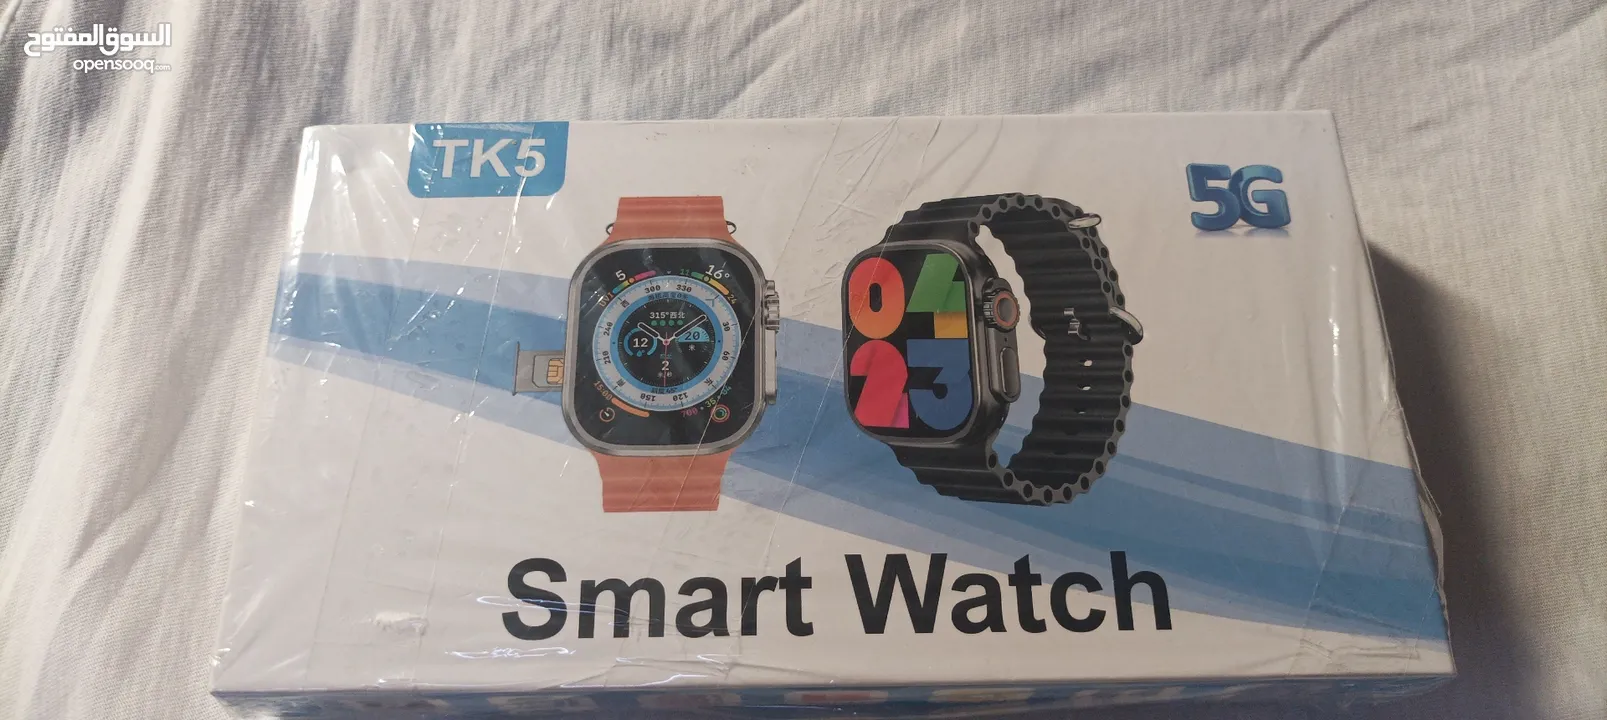 Smart Watch 5G